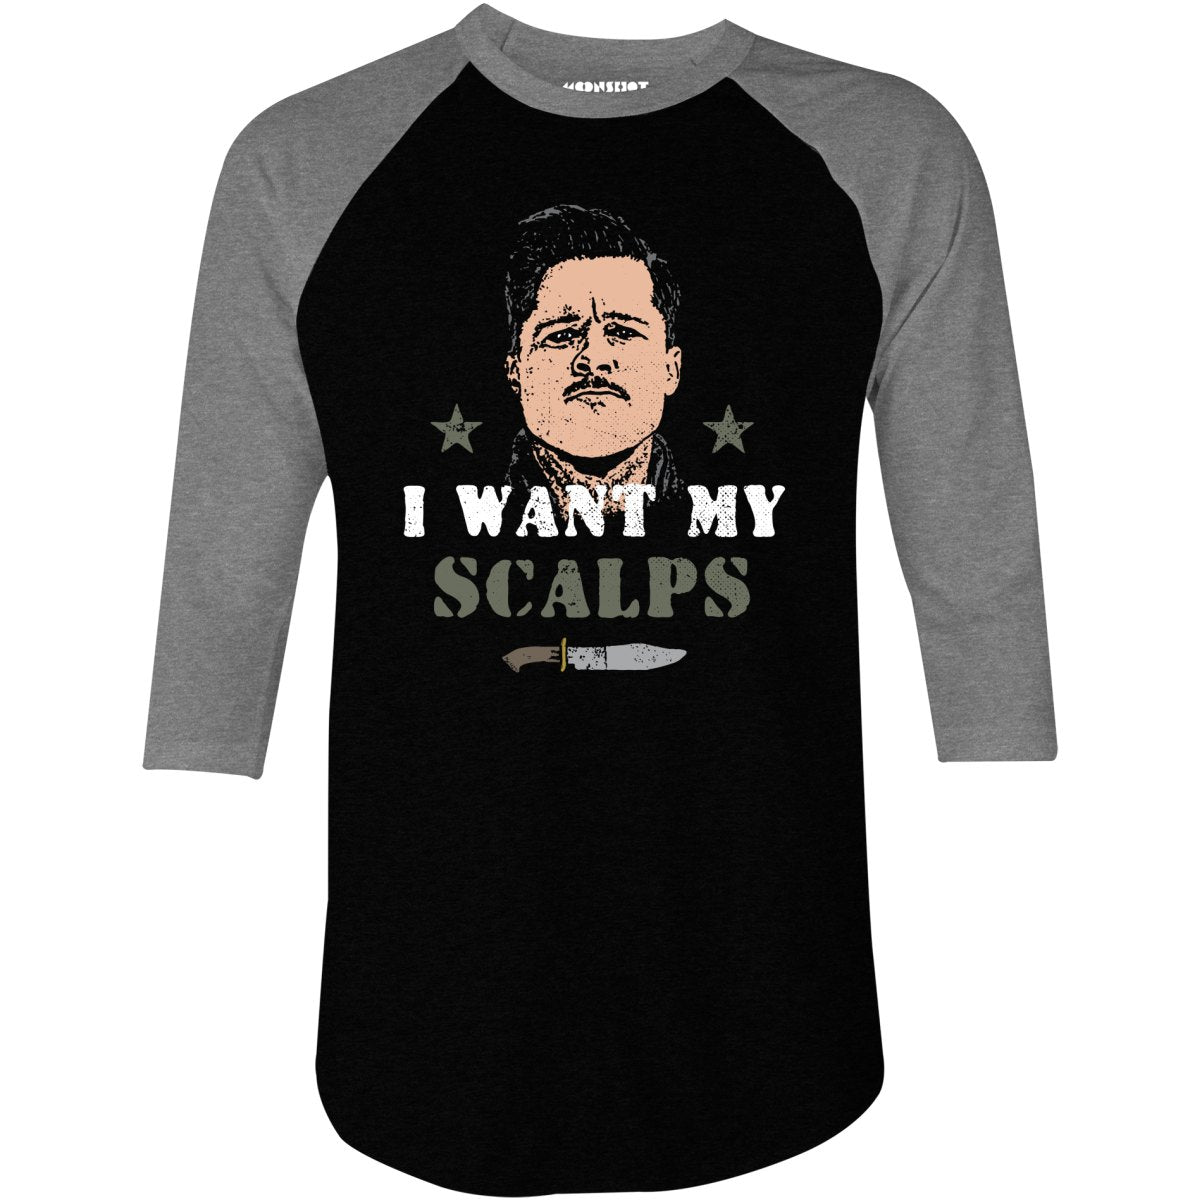 Aldo Raine - I Want My Scalps - 3/4 Sleeve Raglan T-Shirt